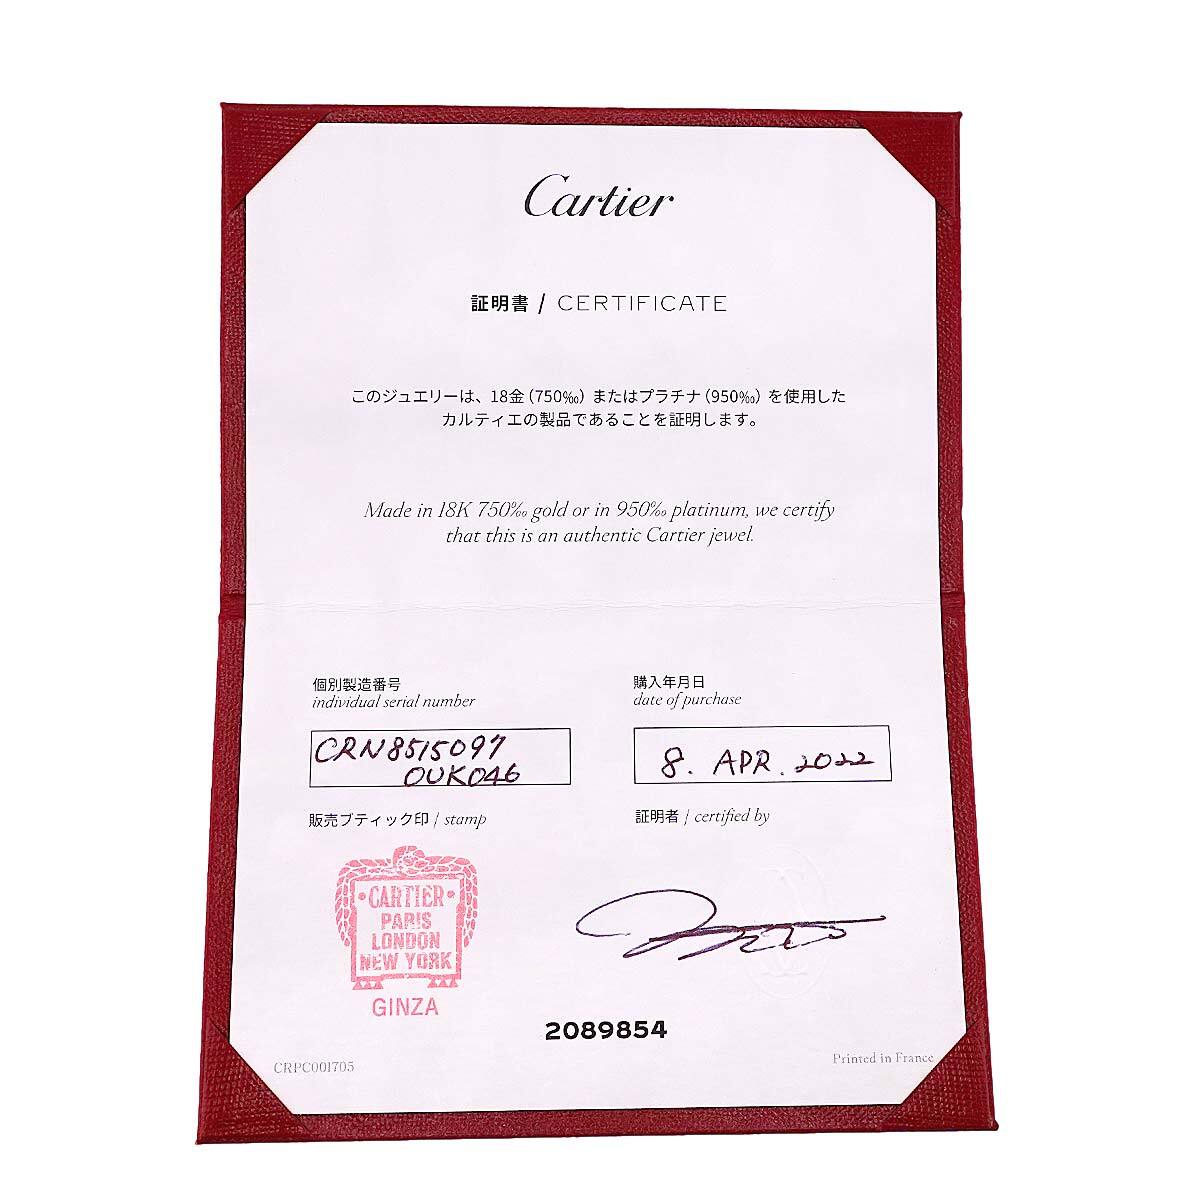  Cartier Cartierpave большой Yahoo! p серьги K18 YG желтое золото 750 Diamond Earrings Pierced[ сертификат имеется ] 90227359